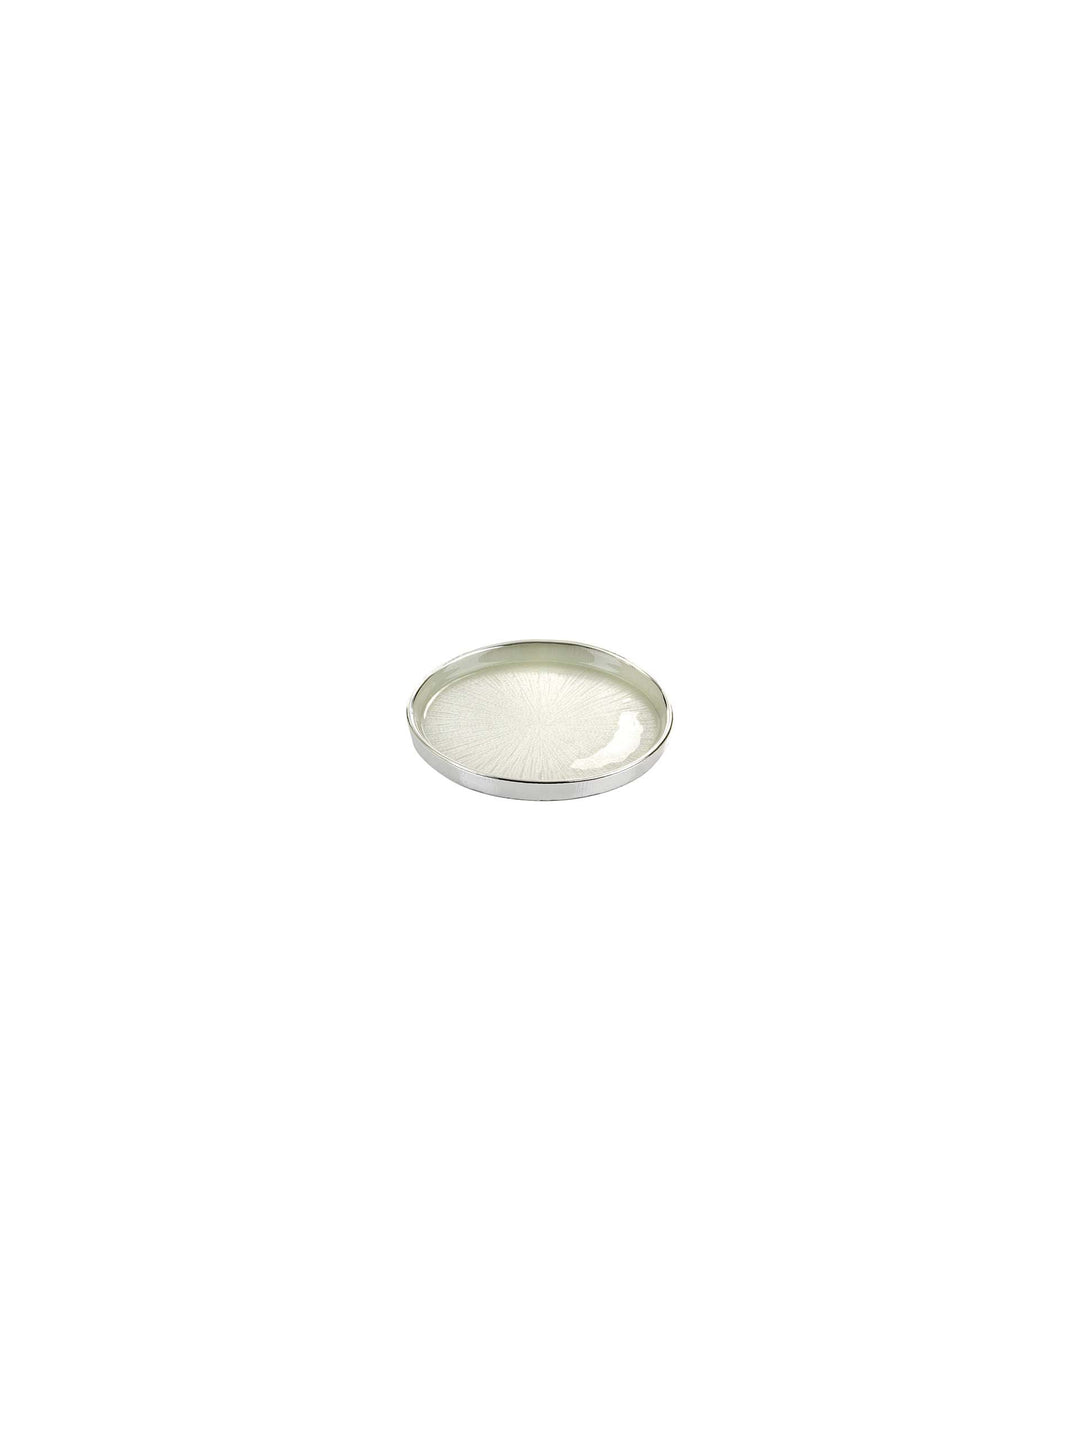 Argenesi -bakke Sottobiciere Luce D. 12cm White Glass Pearl Silver 0.02868